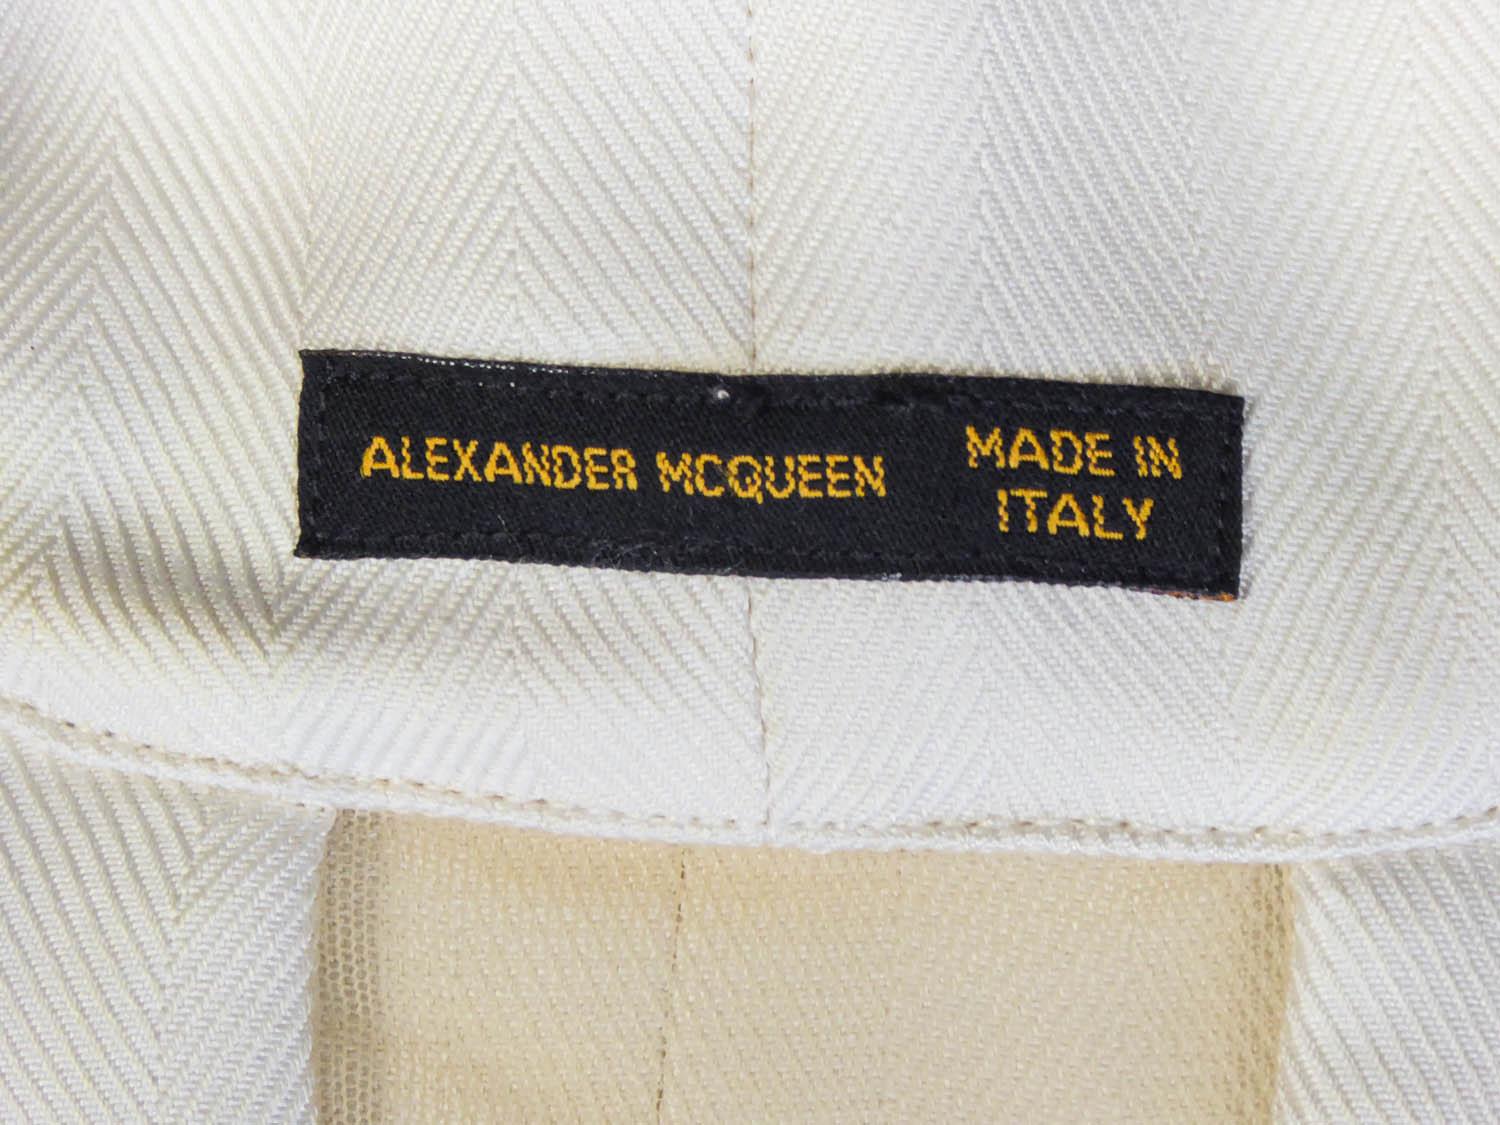 Alexander Mac Queen Tuxedo Pant Suit Circa 2000 7